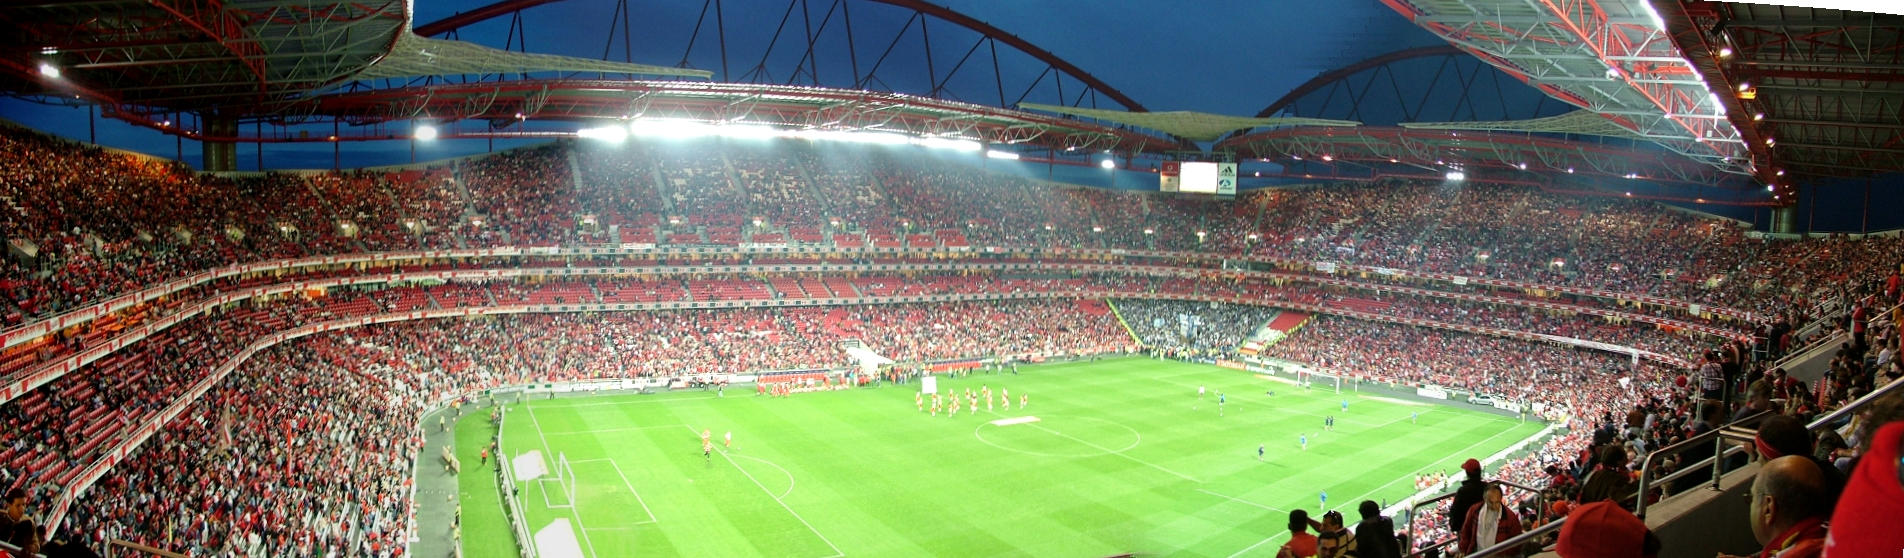 Benfica vs. Porto Panoramic by Gillus on DeviantArt